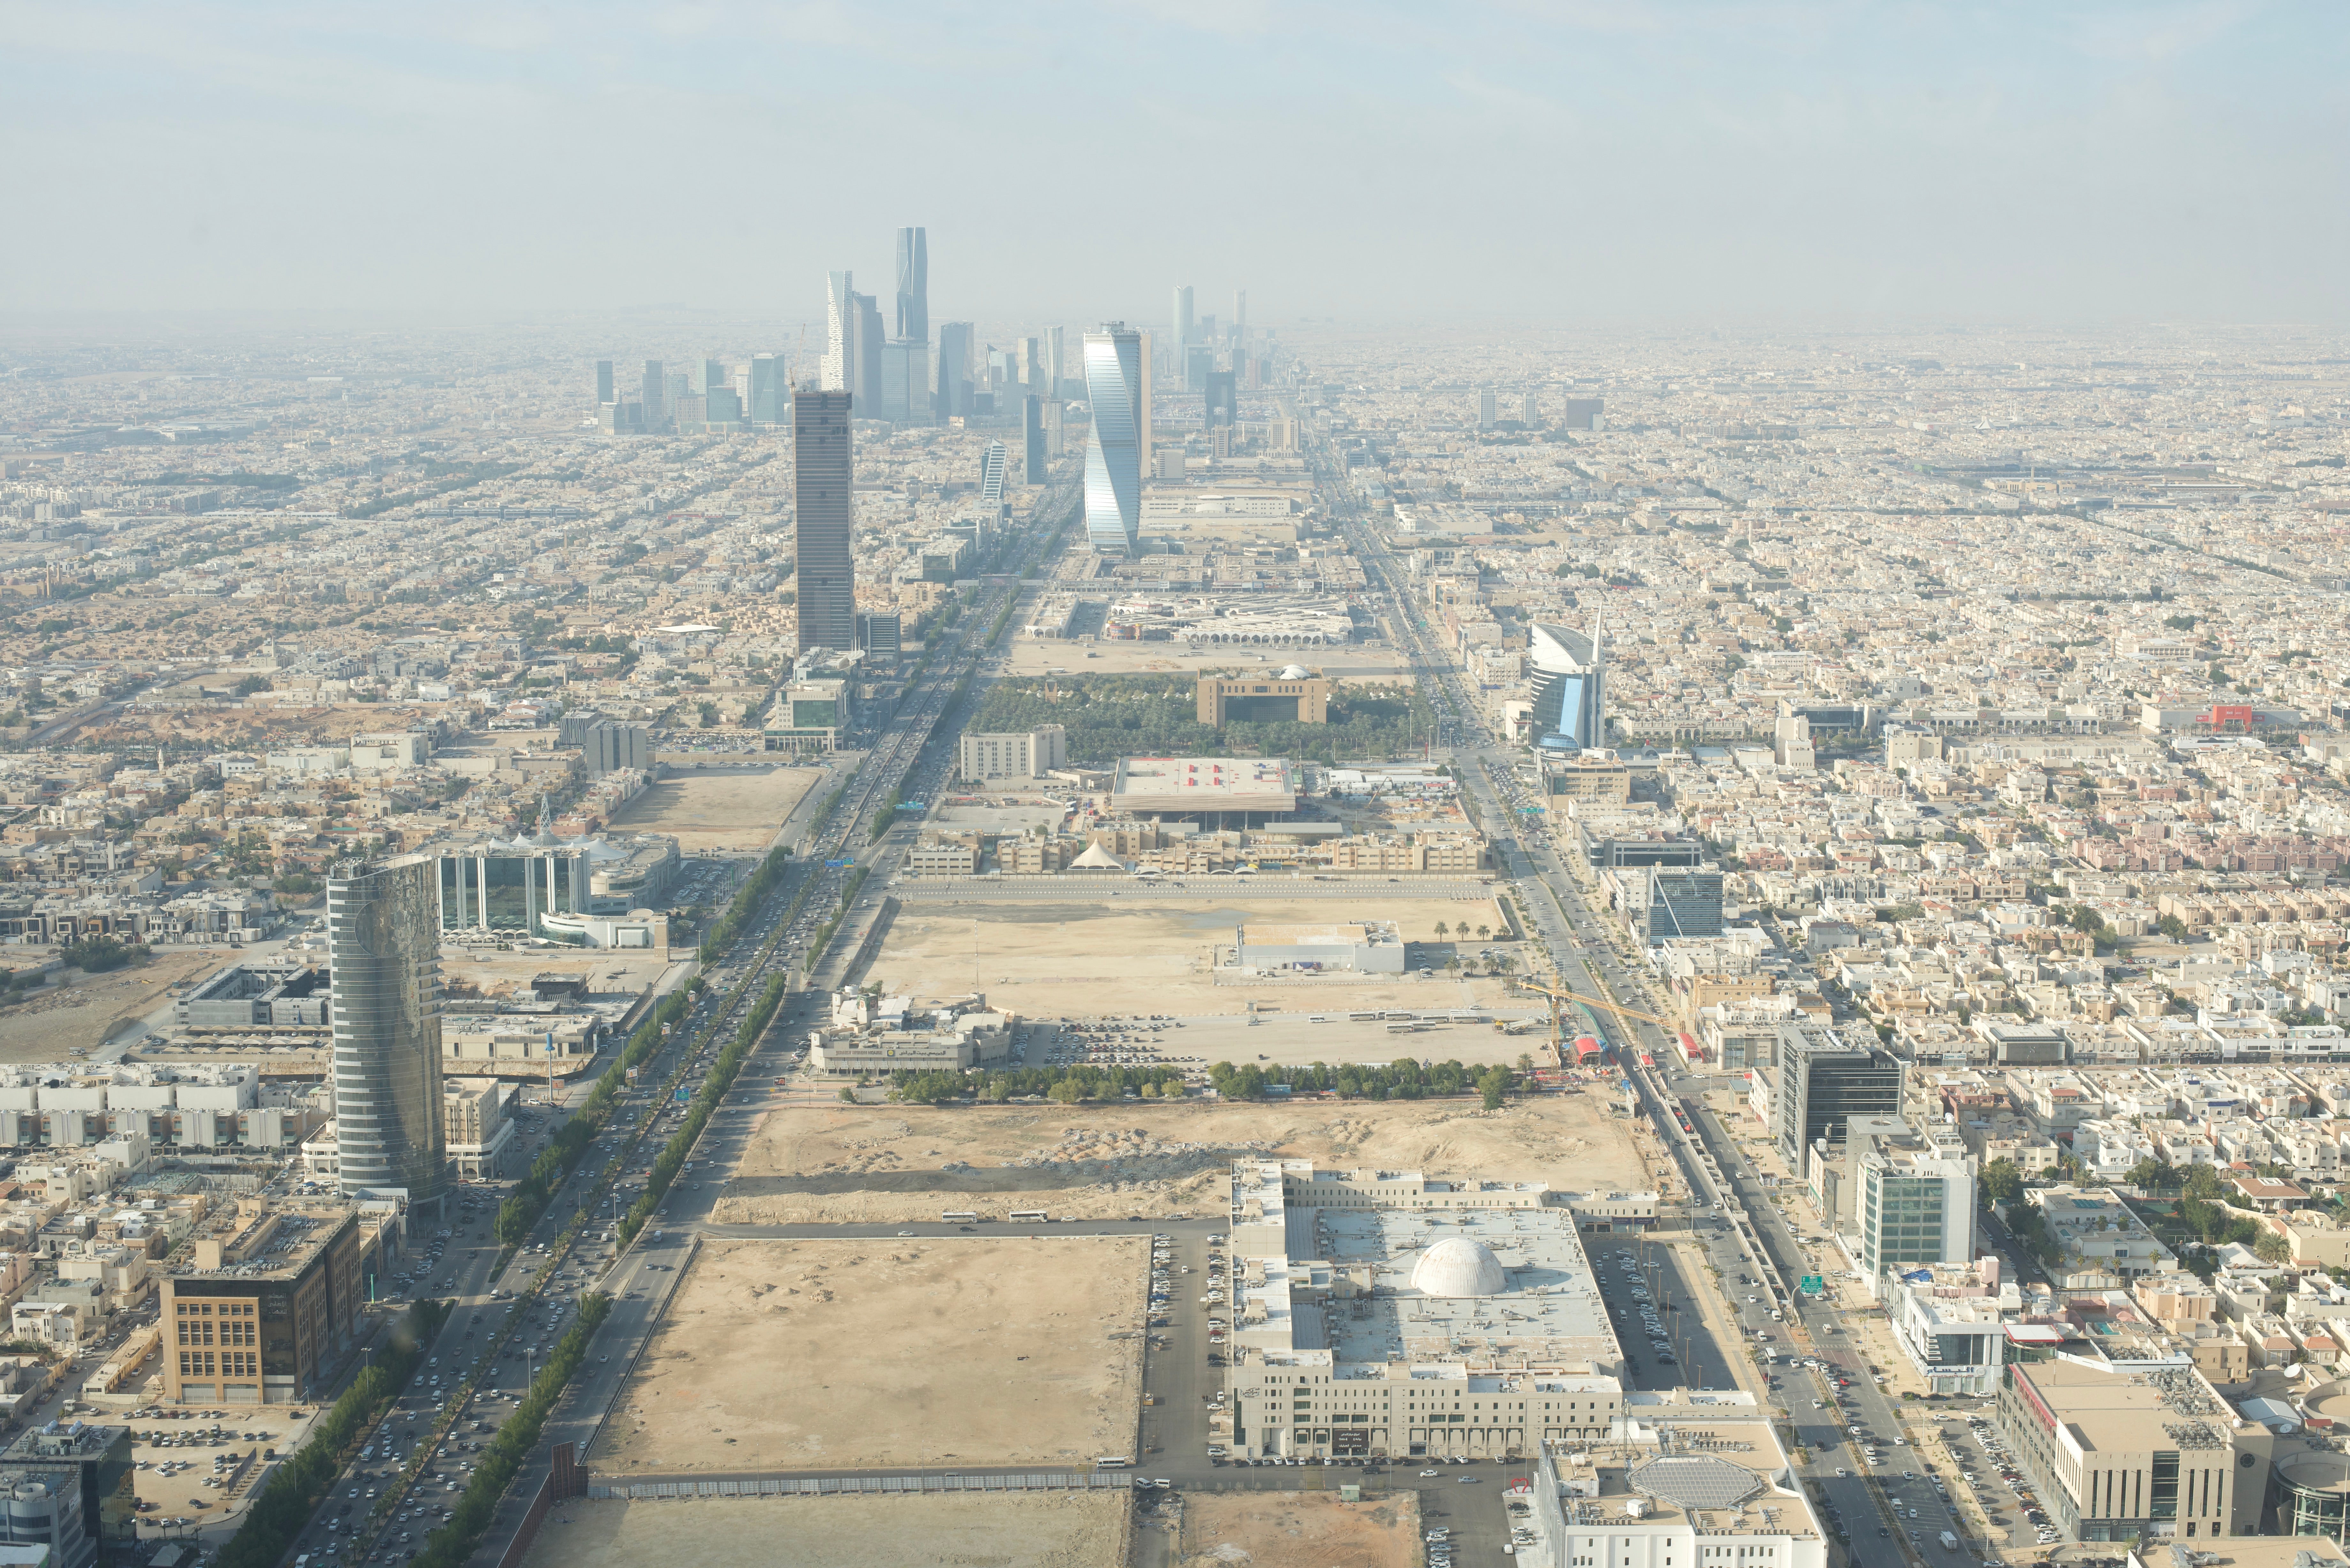 Views from the Kingdom Tower skybridge in Riyadh